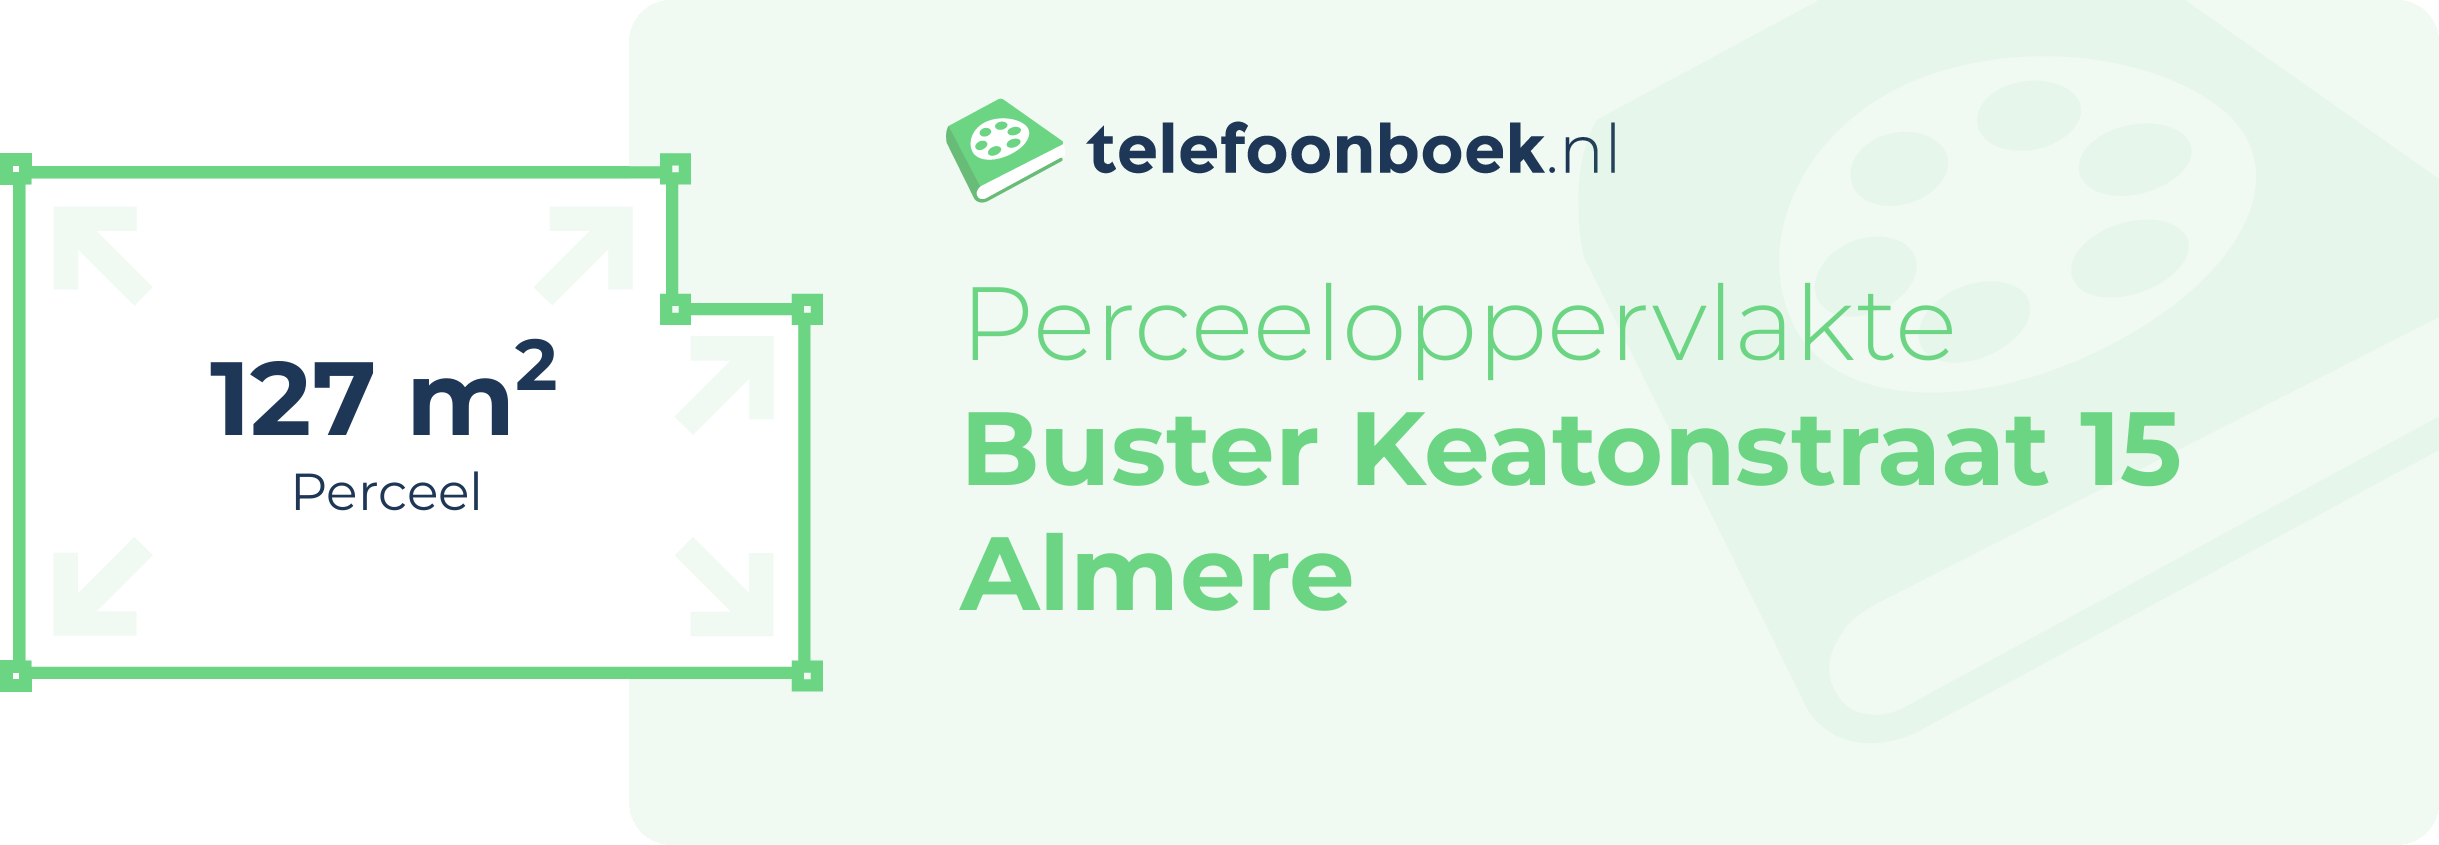 Perceeloppervlakte Buster Keatonstraat 15 Almere